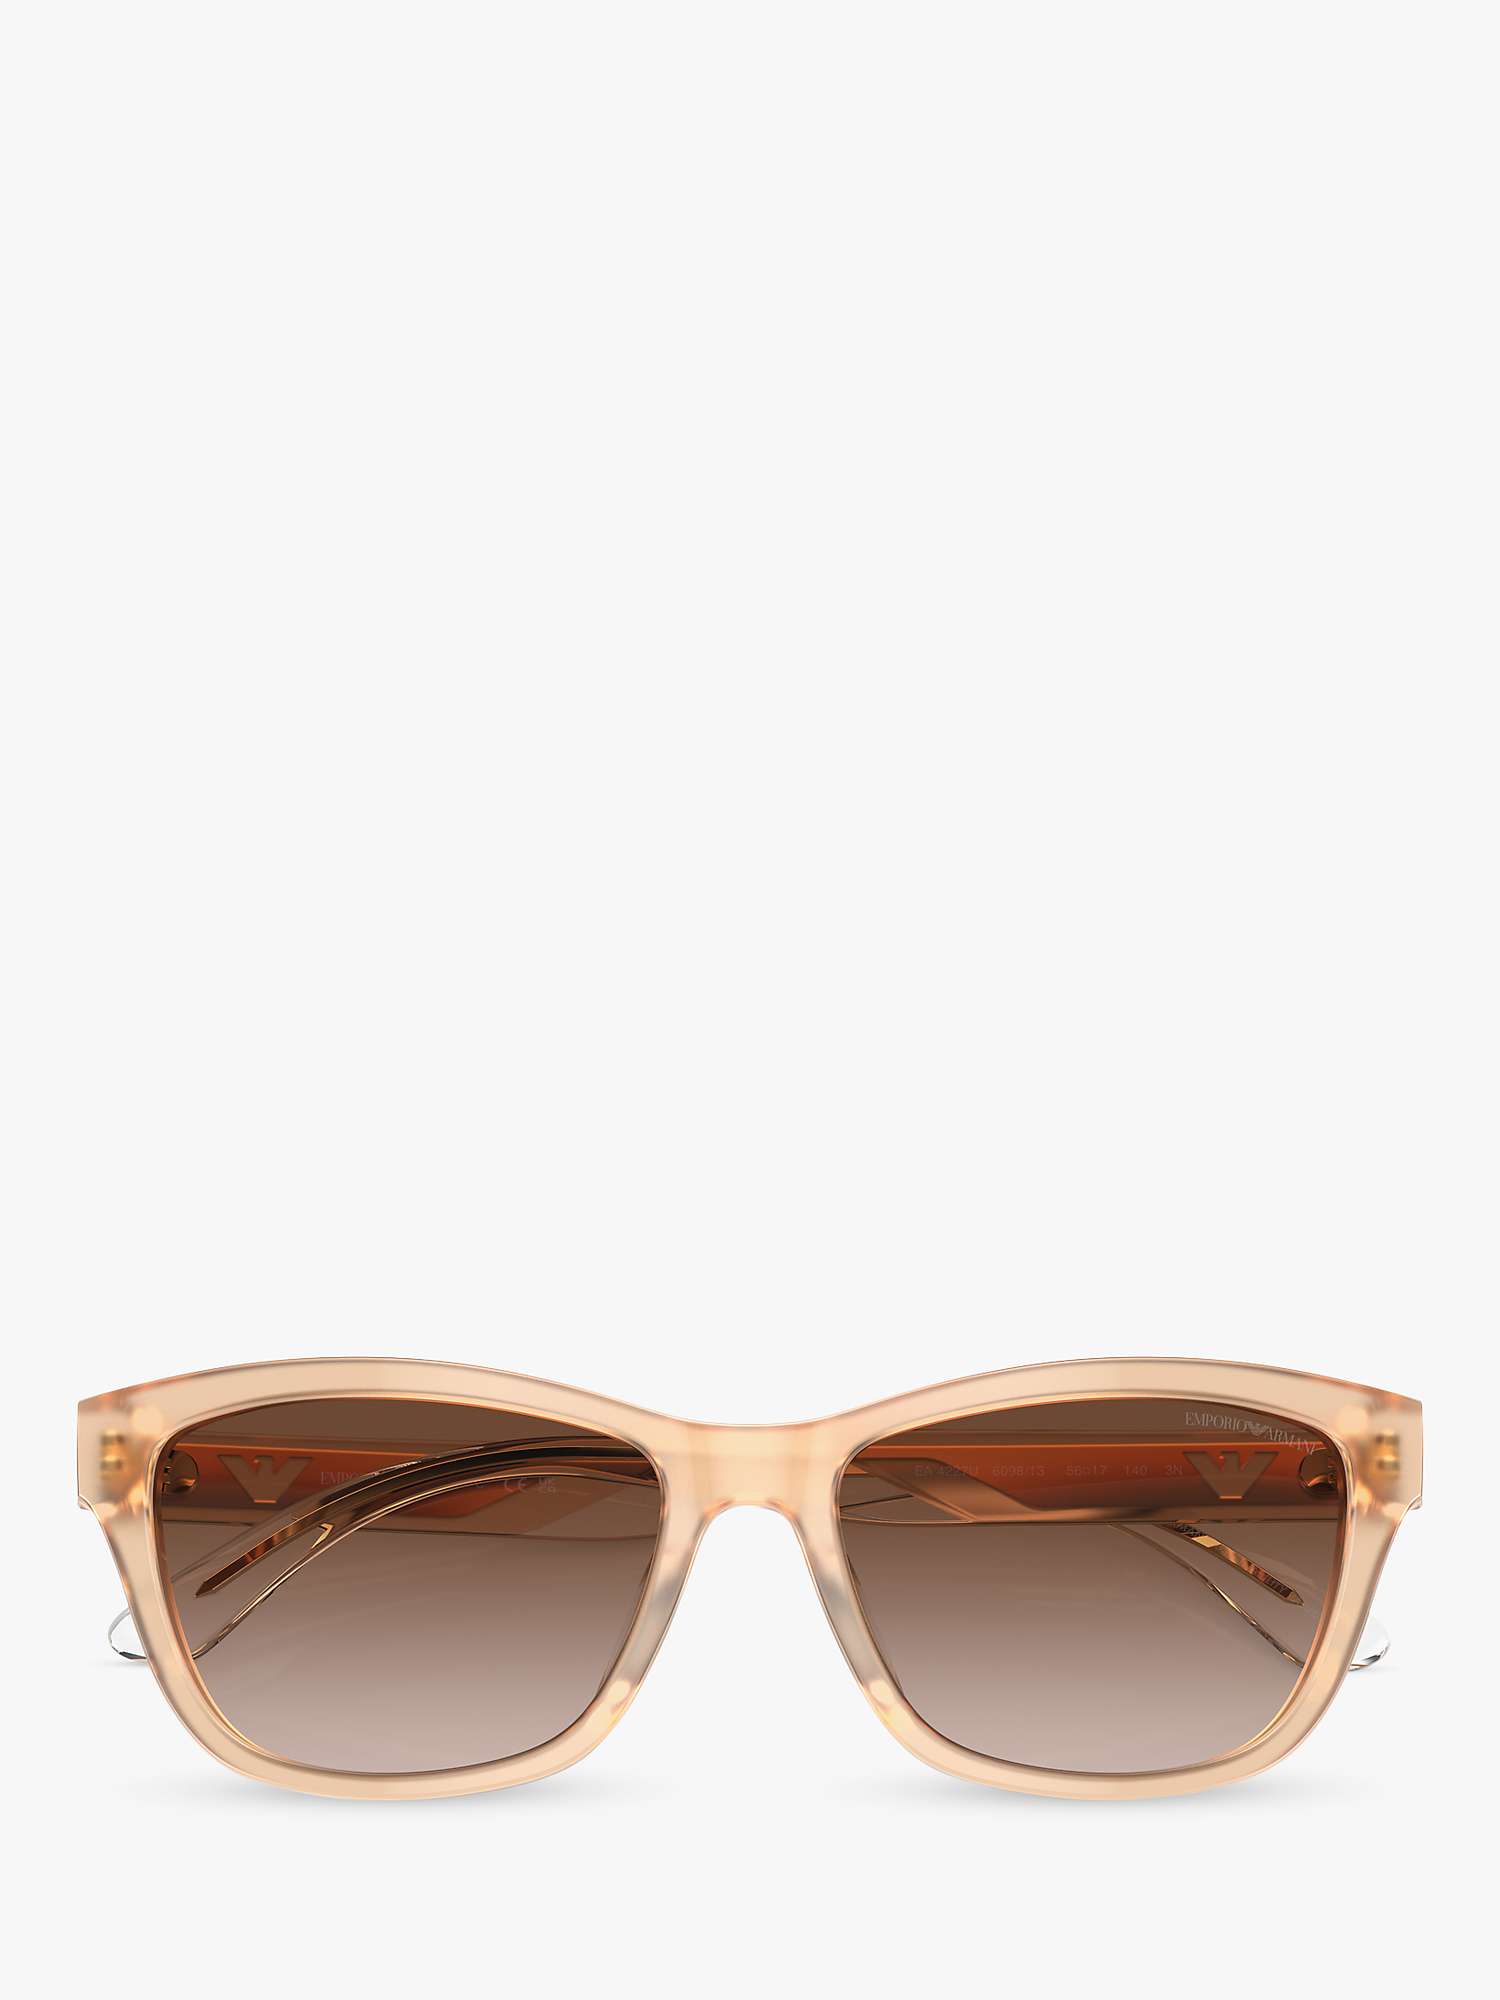 Buy Emporio Armani EA4227U Women's Square Sunglasses, Opaline Tundra/Brown Gradient Online at johnlewis.com